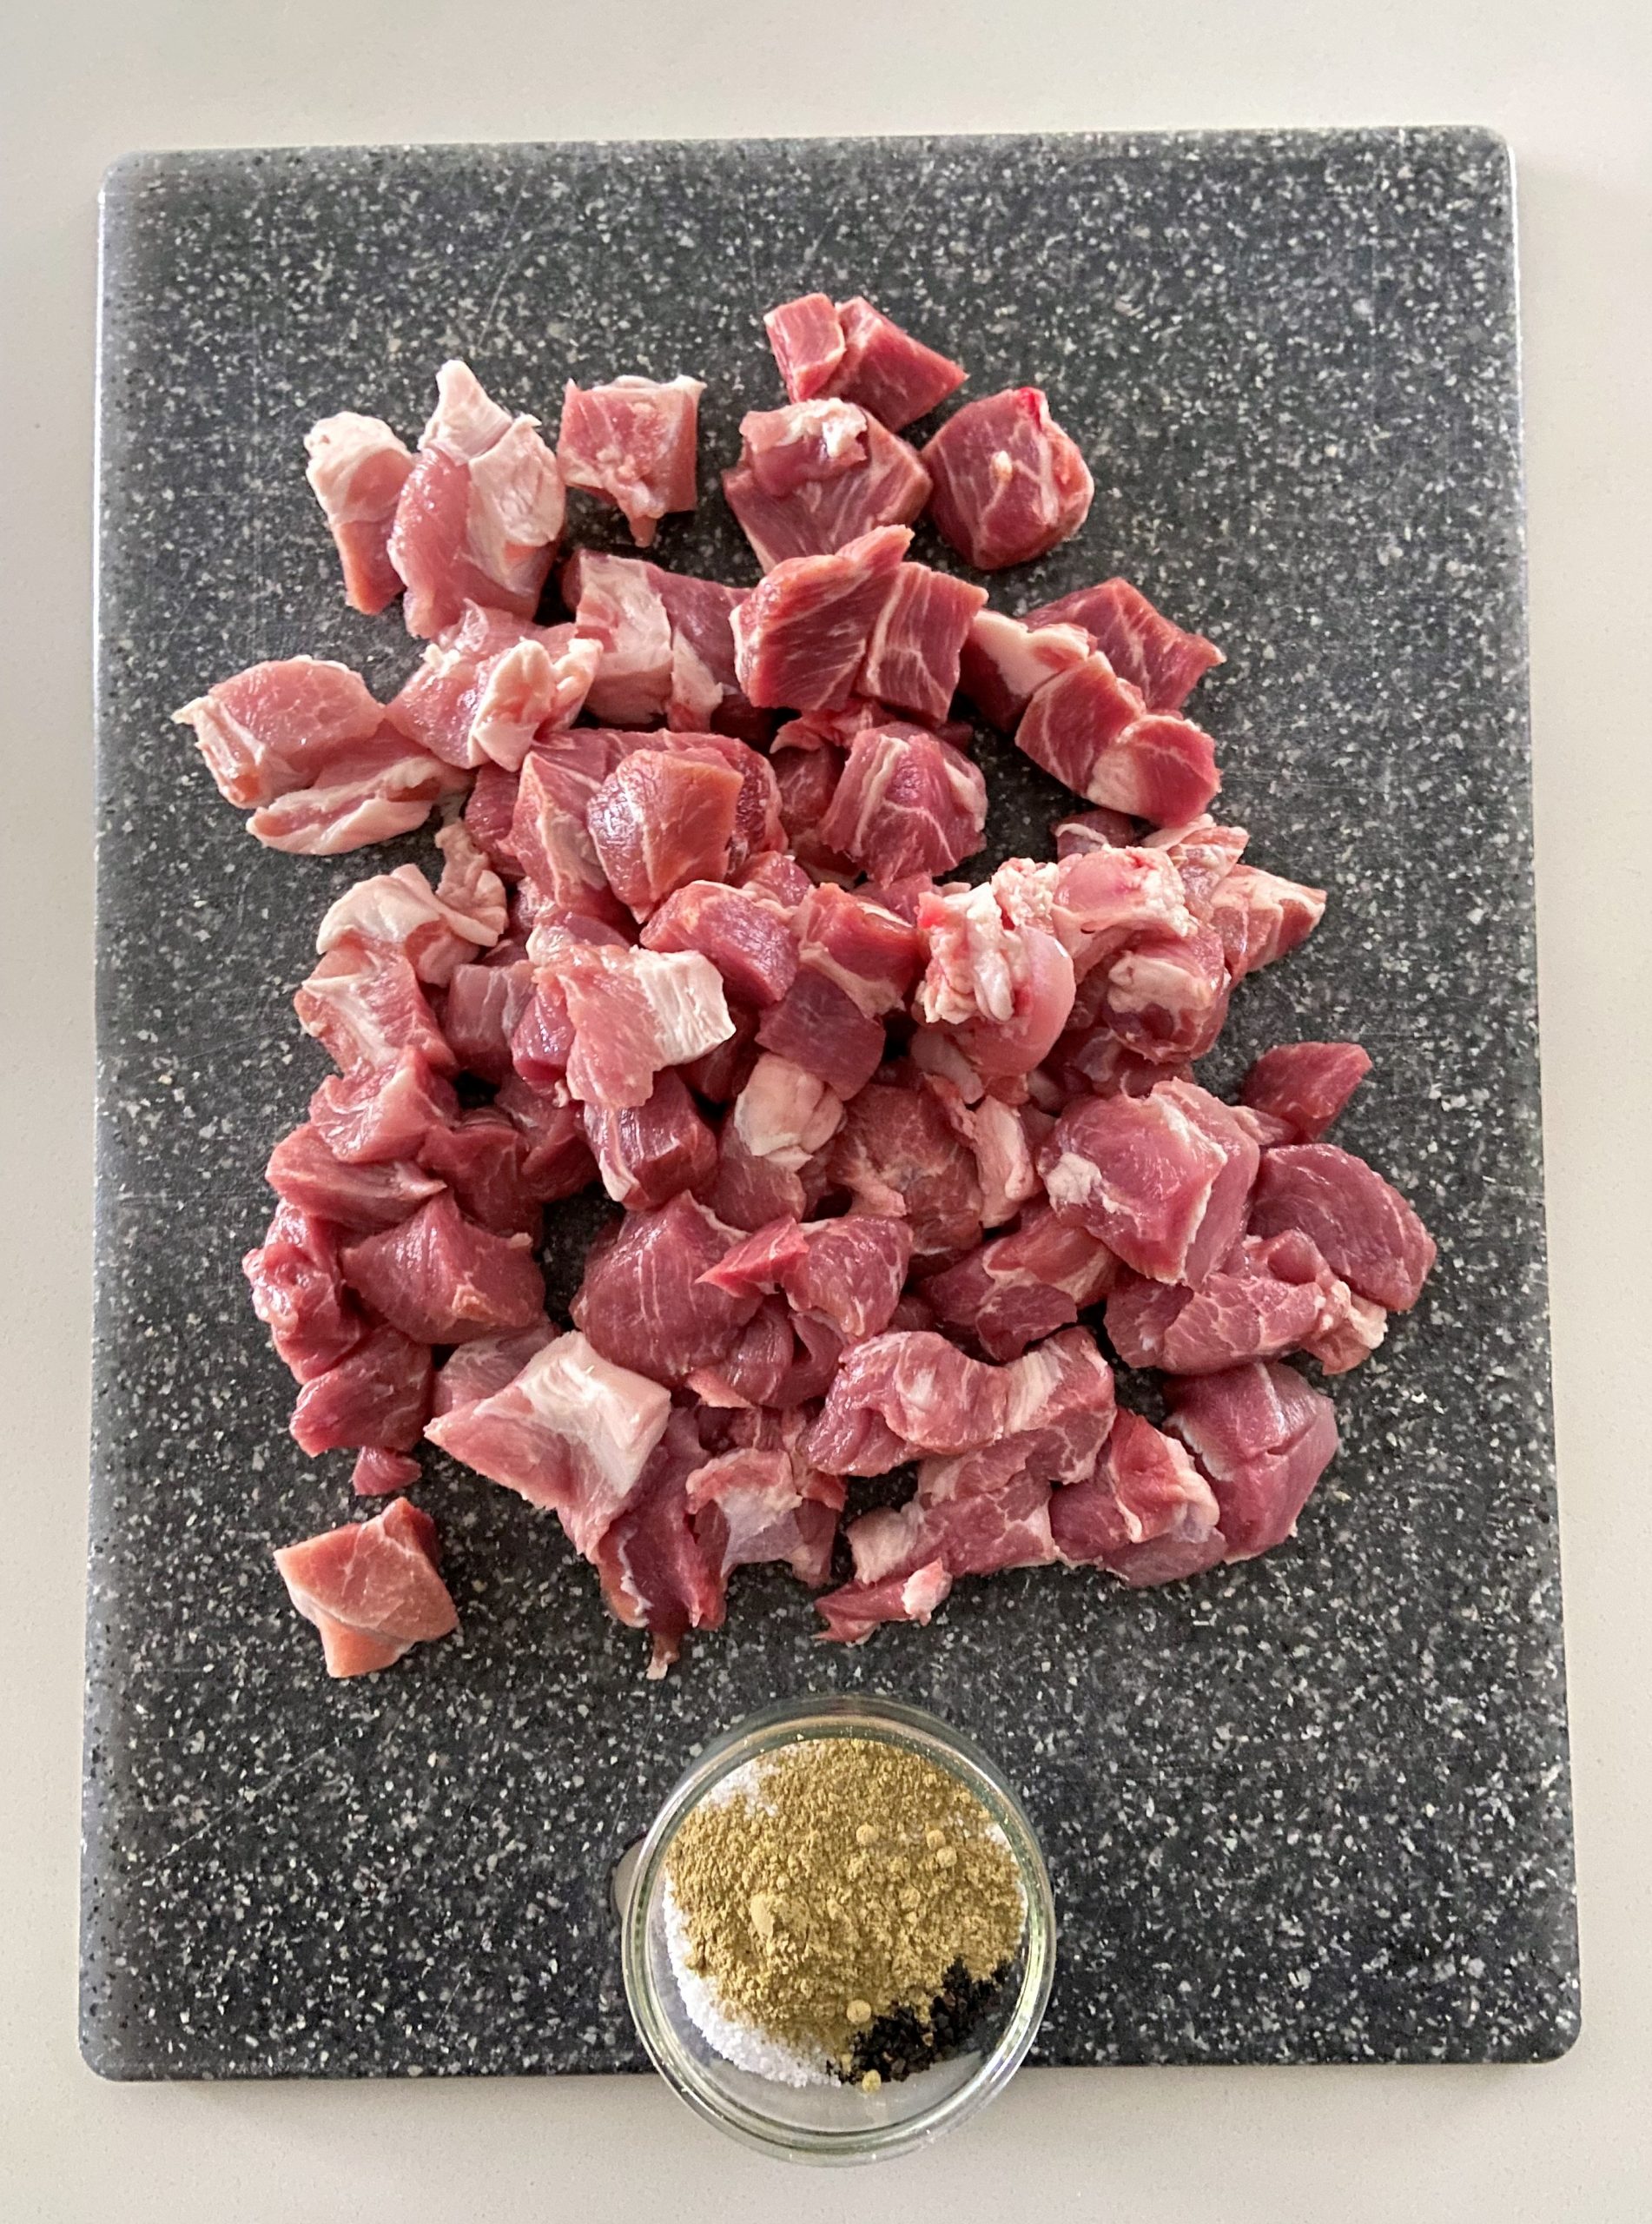 chopped pork